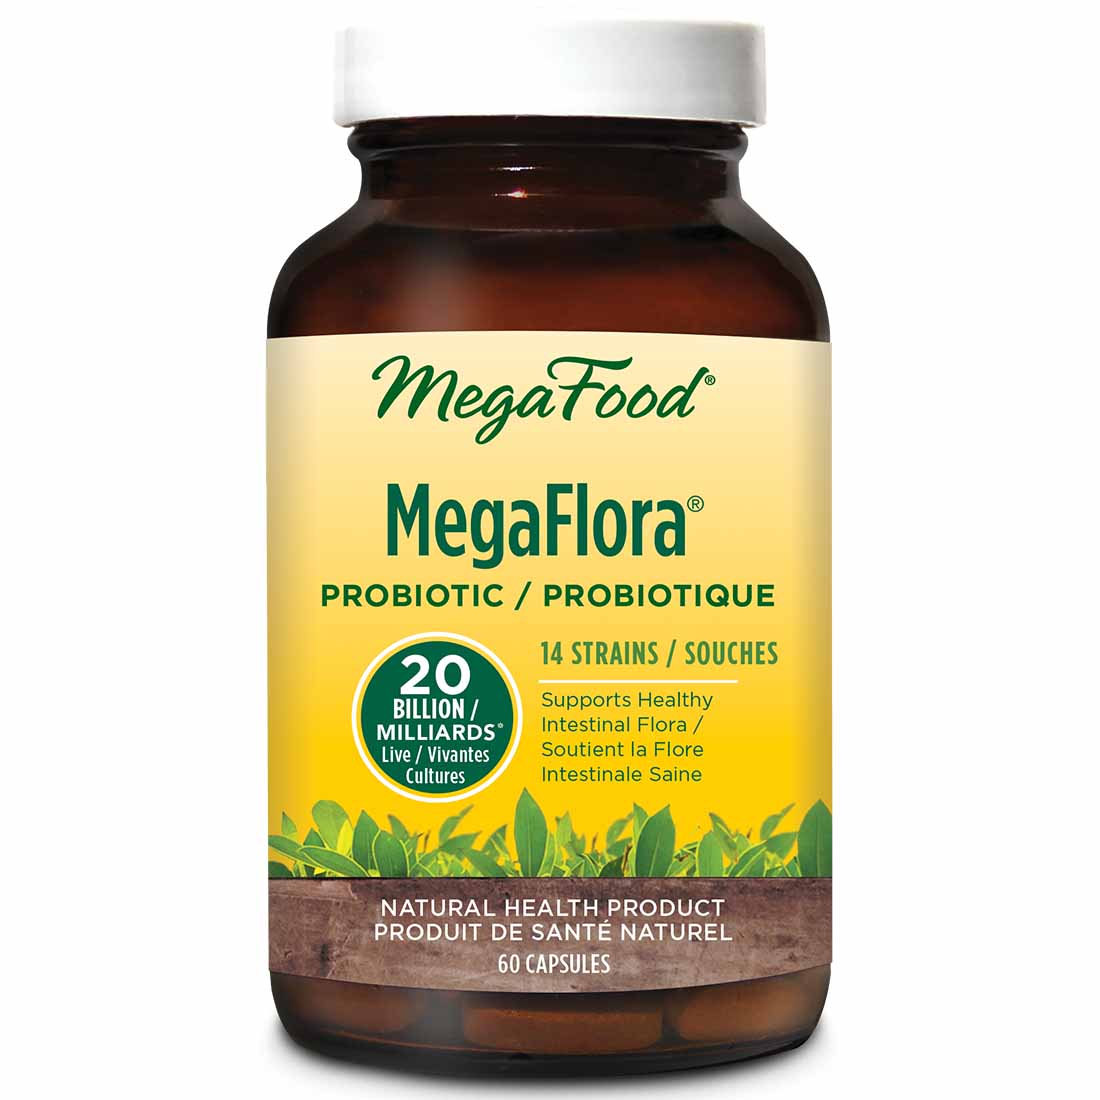 MegaFood MegaFlora Probiotic Supplement 20 Billion Active CFU